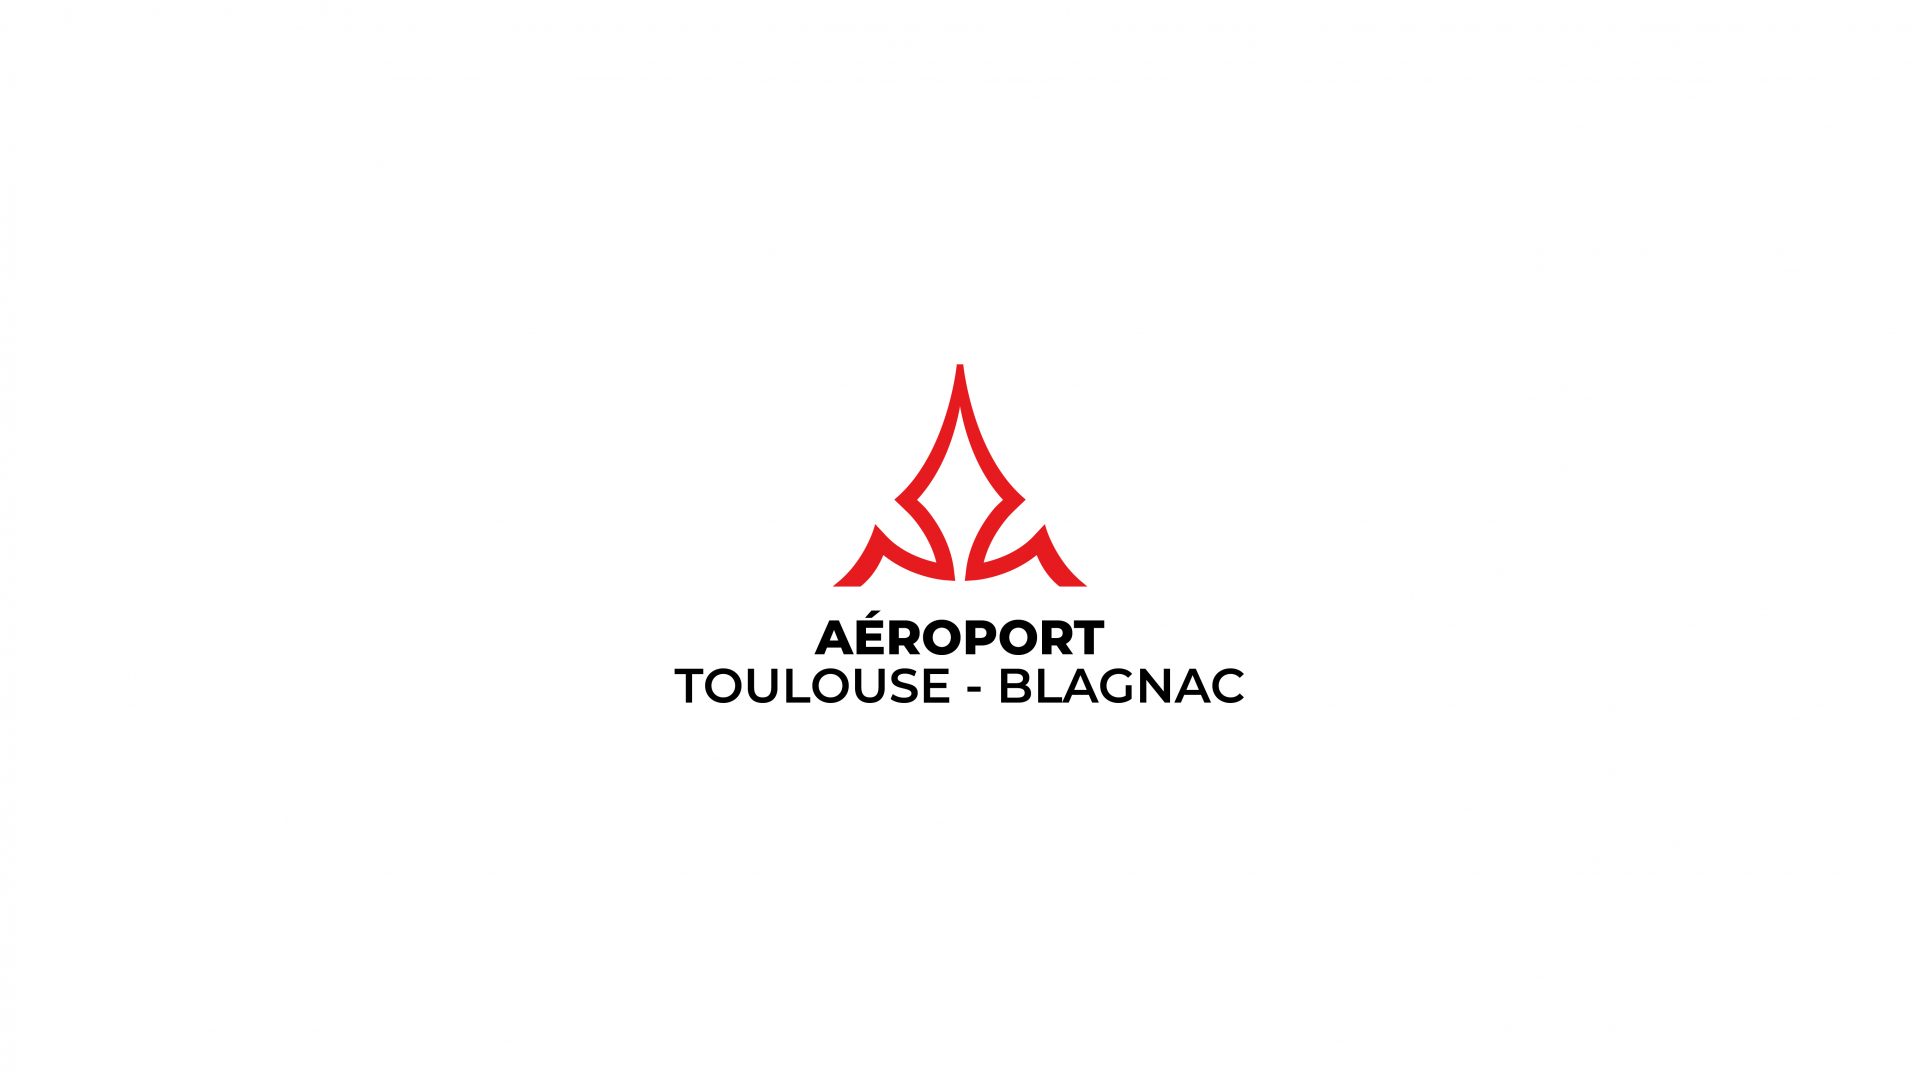 Toulouse Blagnac (ATB)